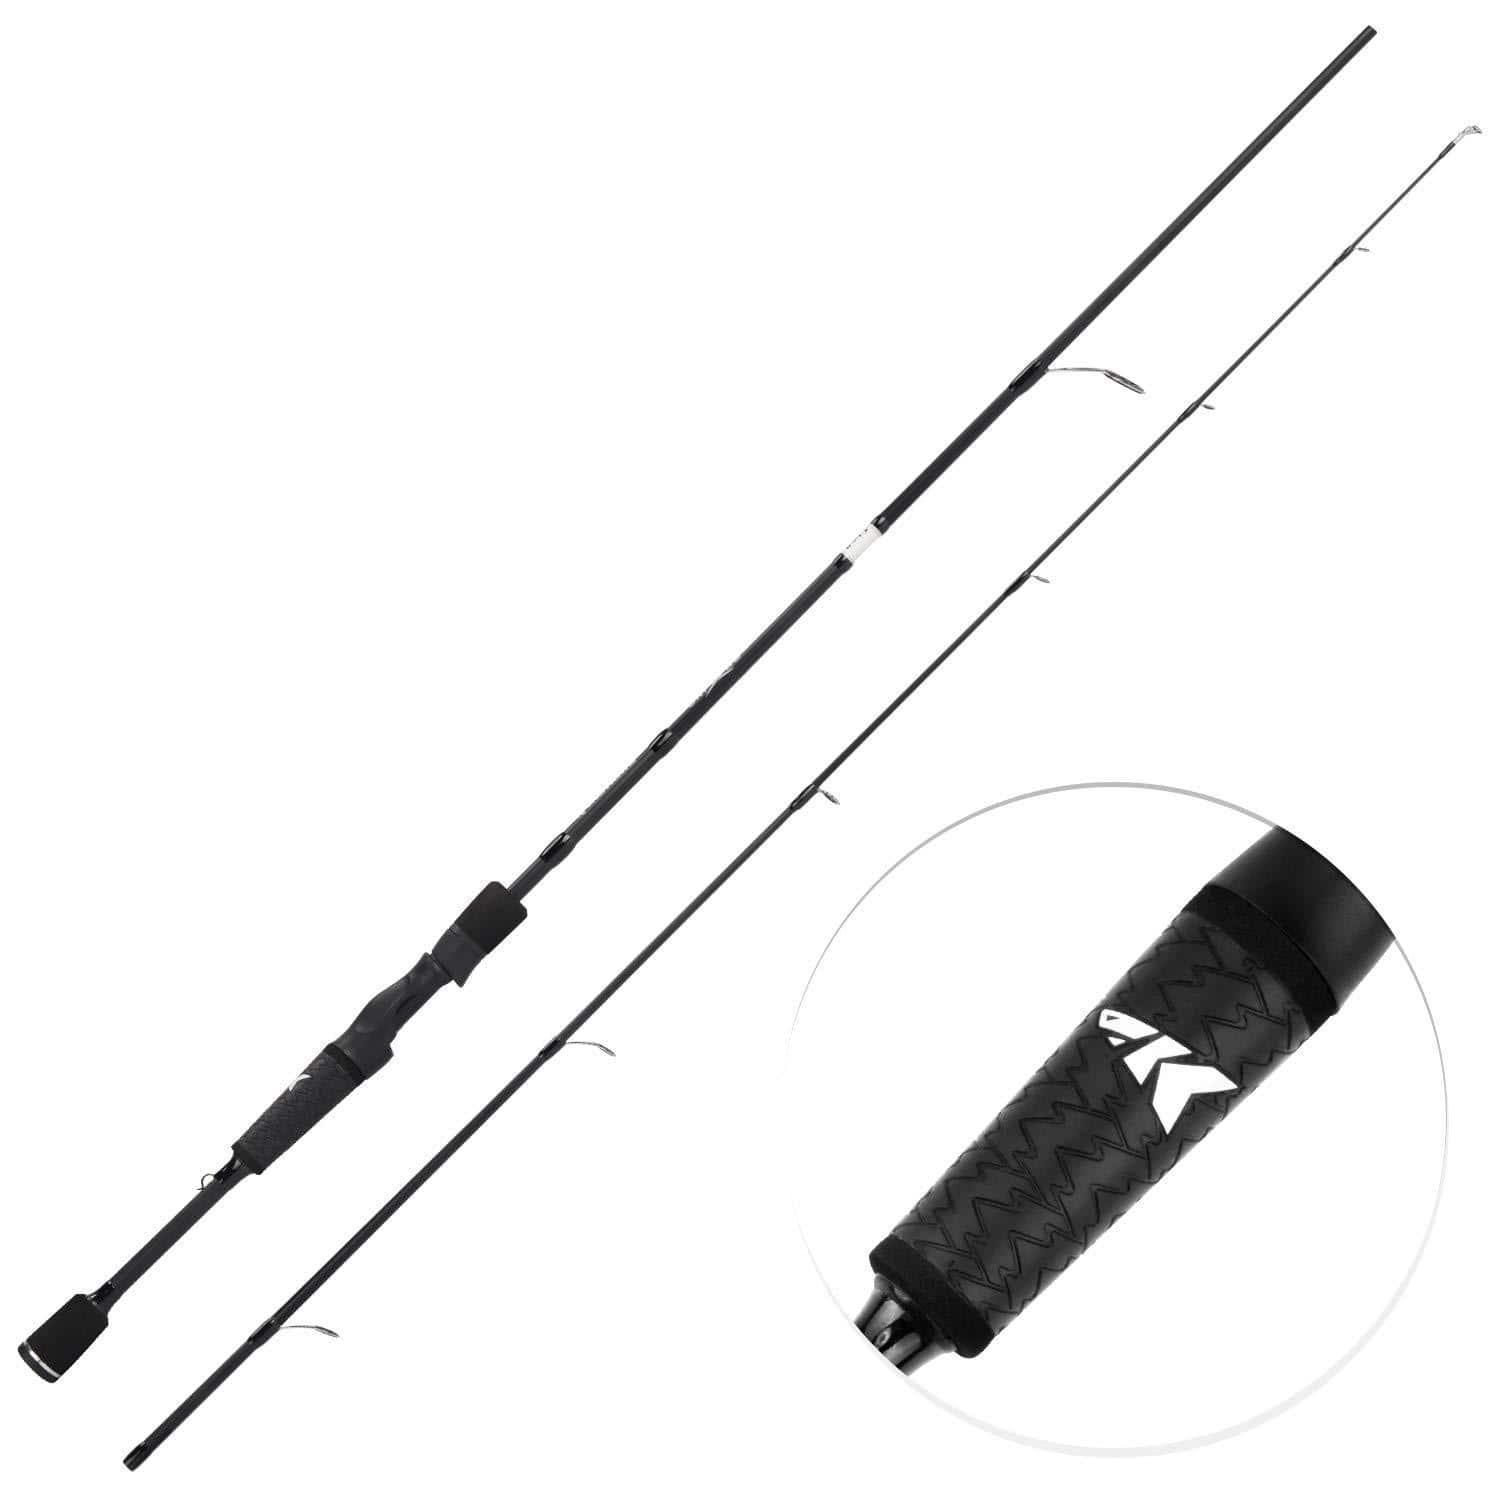 KastKing Crixus Fishing Rods - Casting Rods